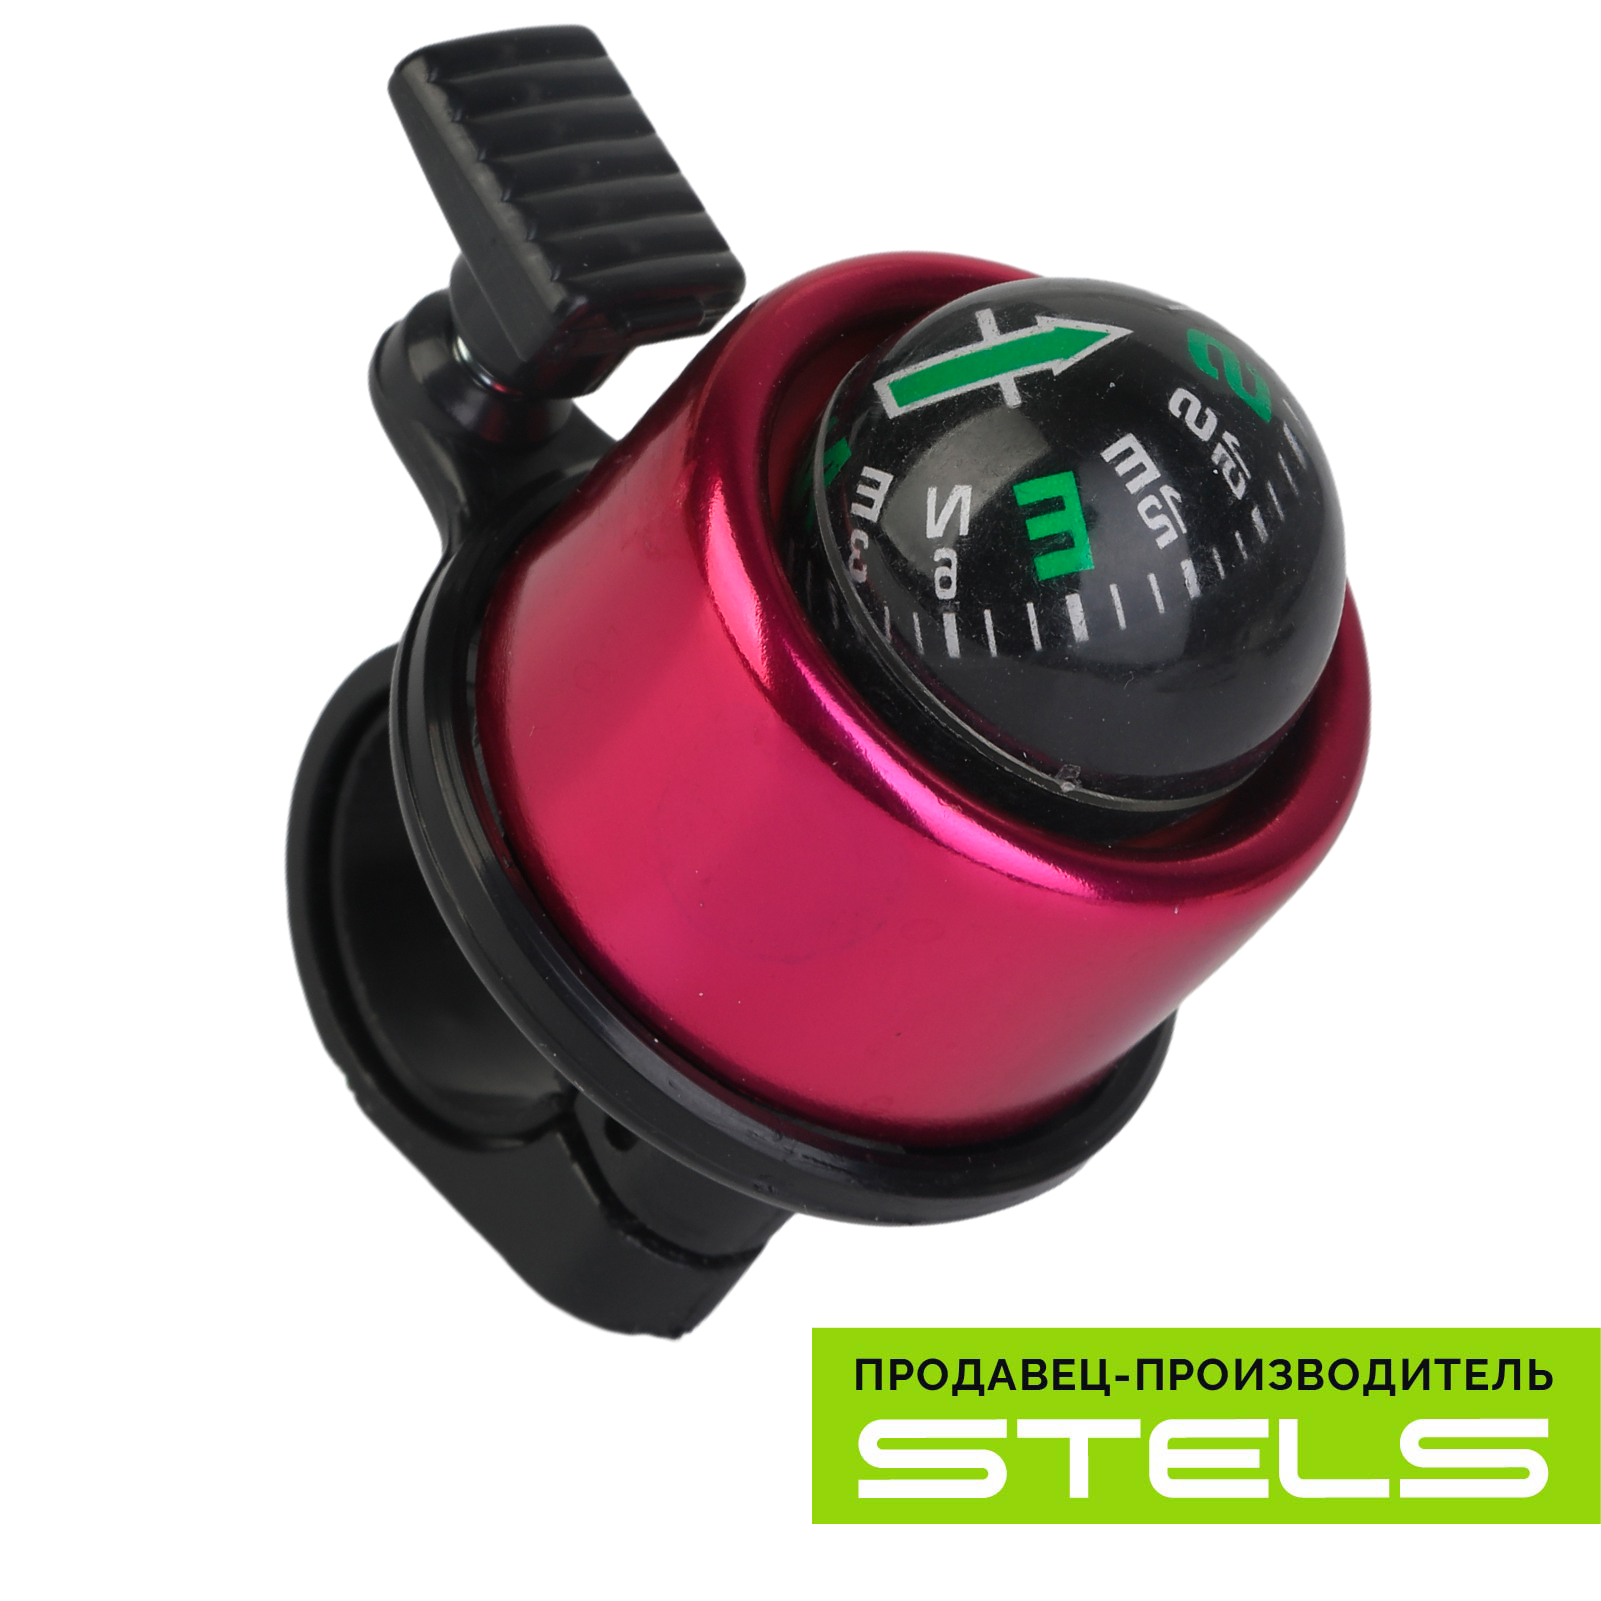 Звонок для велосипеда STELS 14A-10 "Компас" алюминий/пластик, чёрно-пурпурный (item:010)